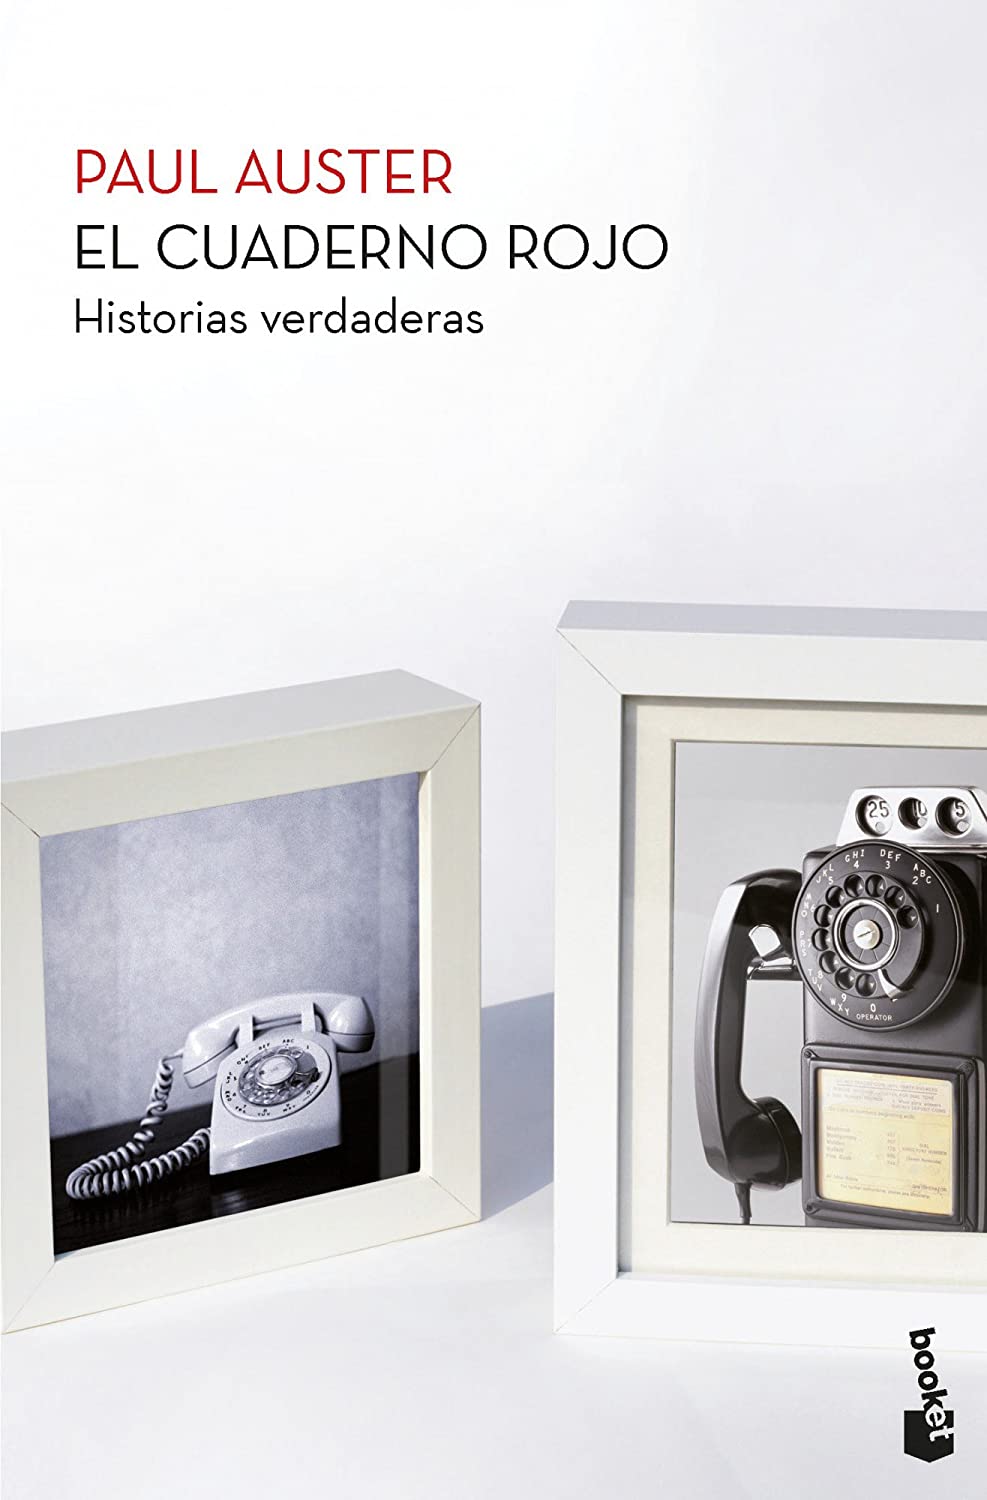 El cuaderno rojo: Historias verdaderas (Biblioteca Paul Auster) (Spanish Edition)